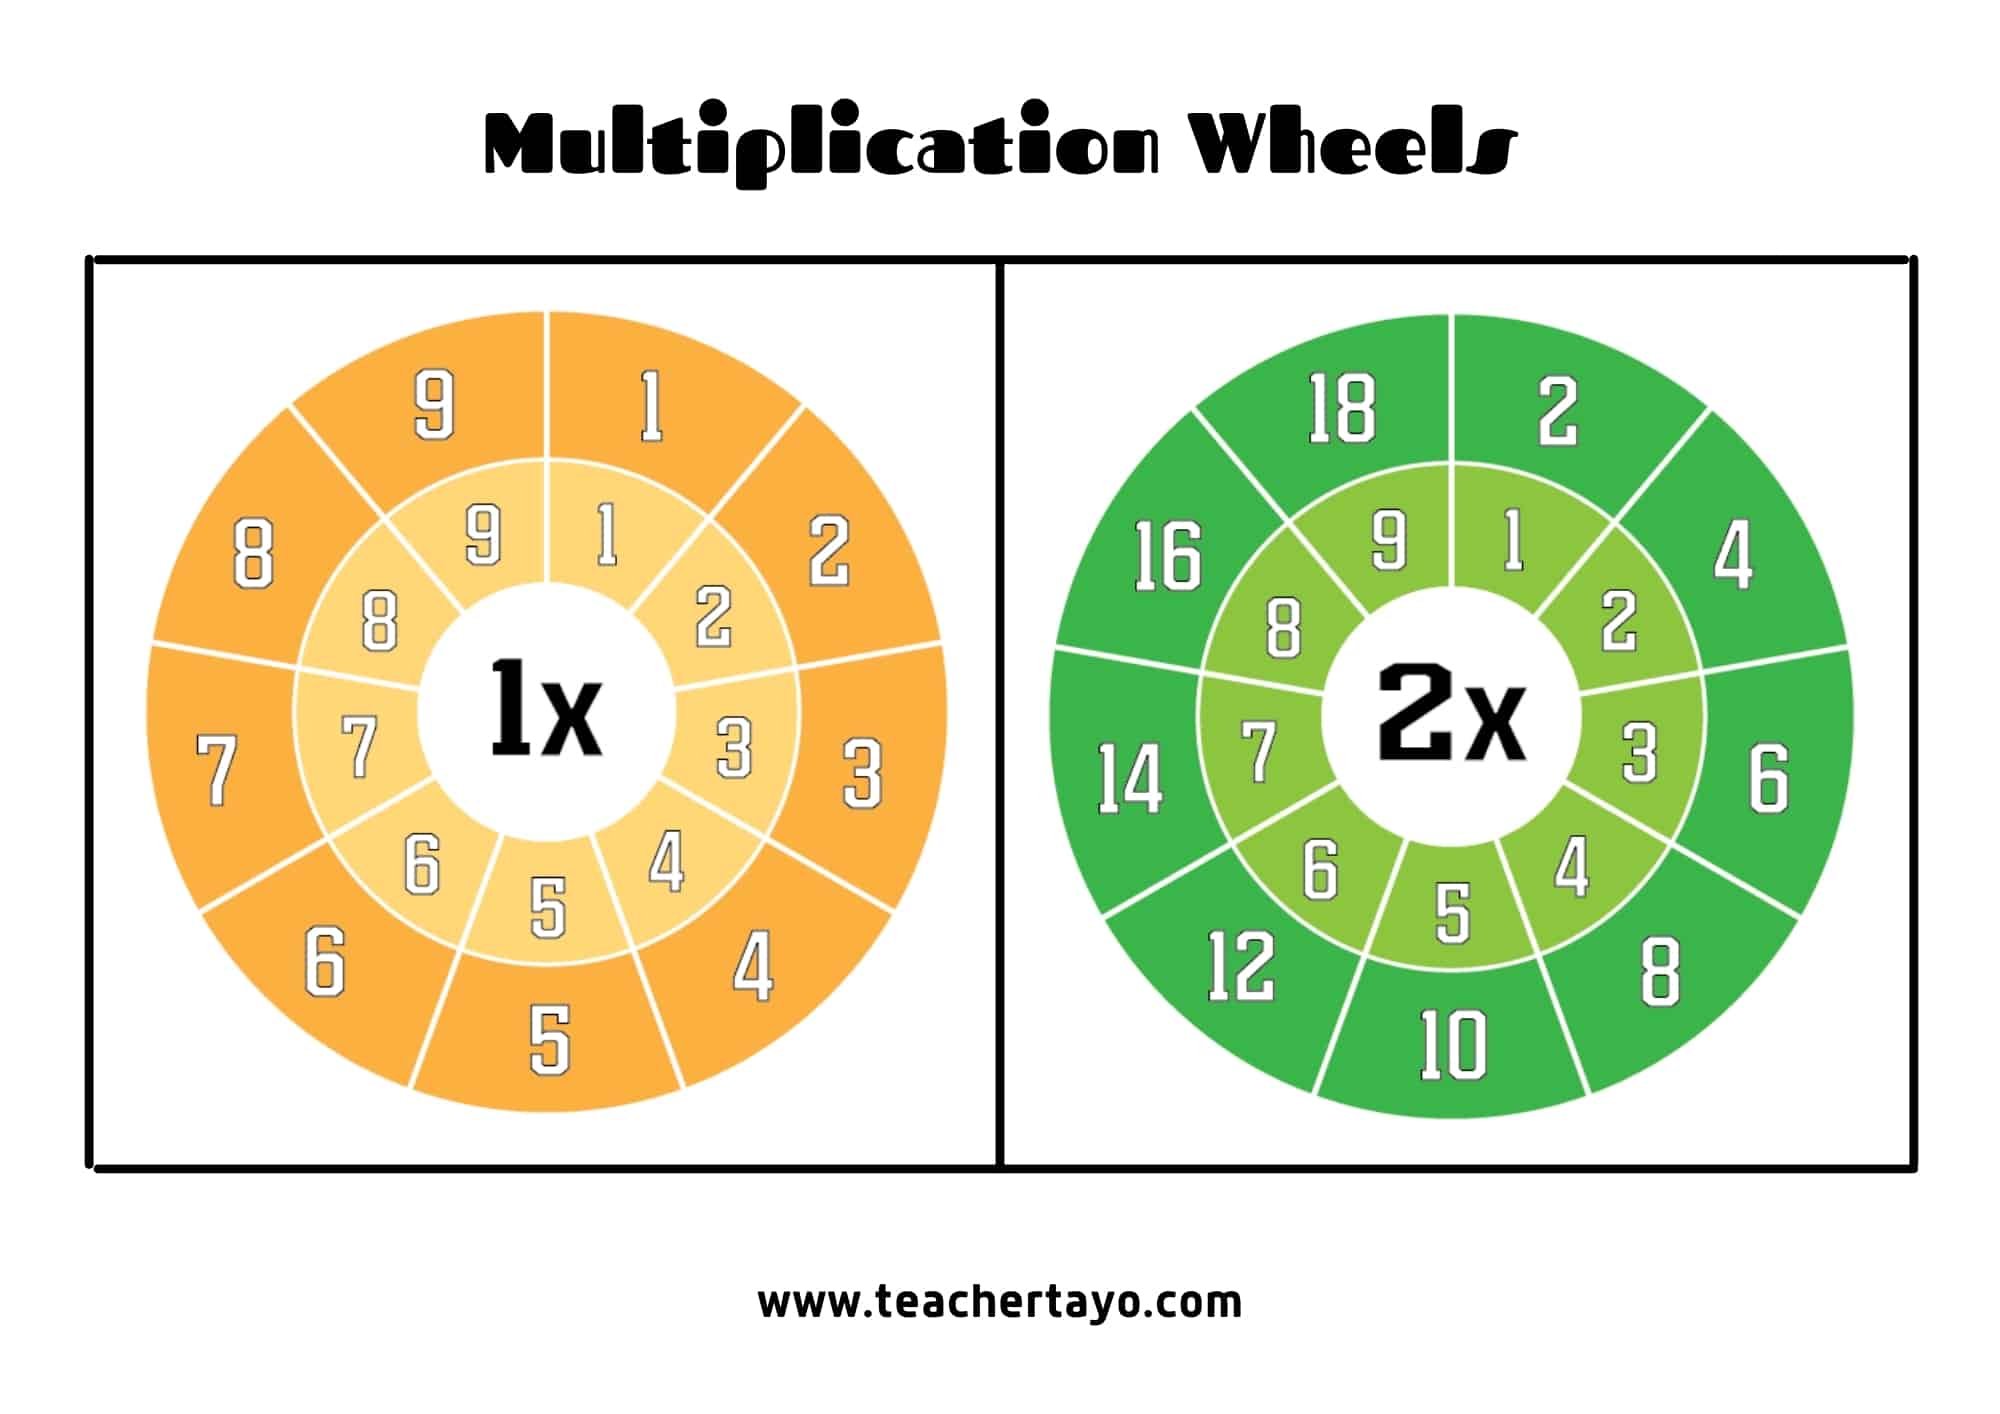 Multiplication Wheels Free Learning Materials Teacher Tayo